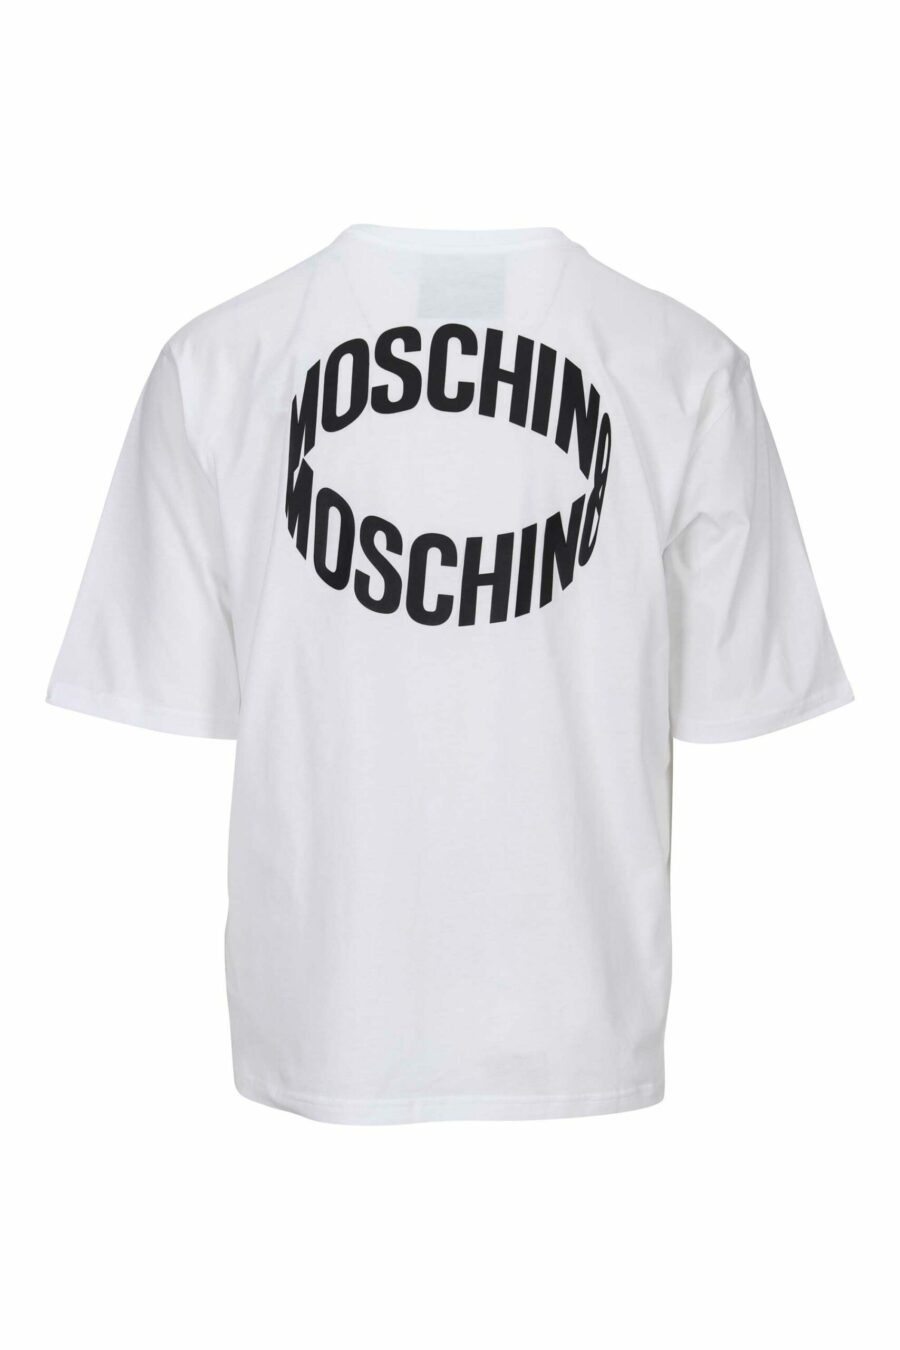 White oversize T-shirt with black circular mini-logo - 667113394060 1 scaled